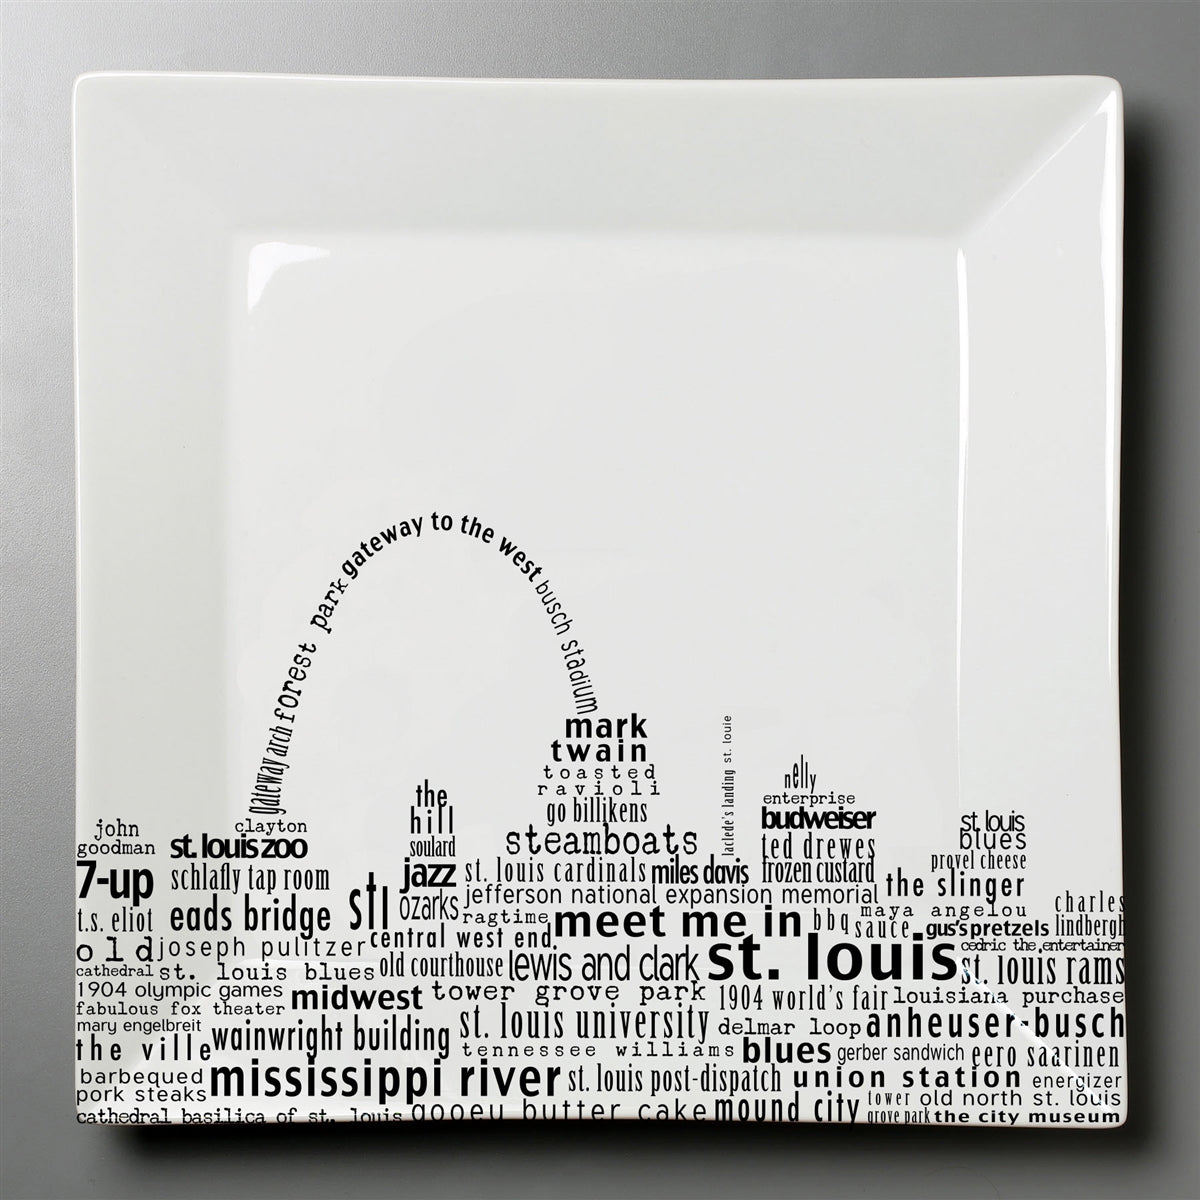 St. Louis Dish - Large Square Plate